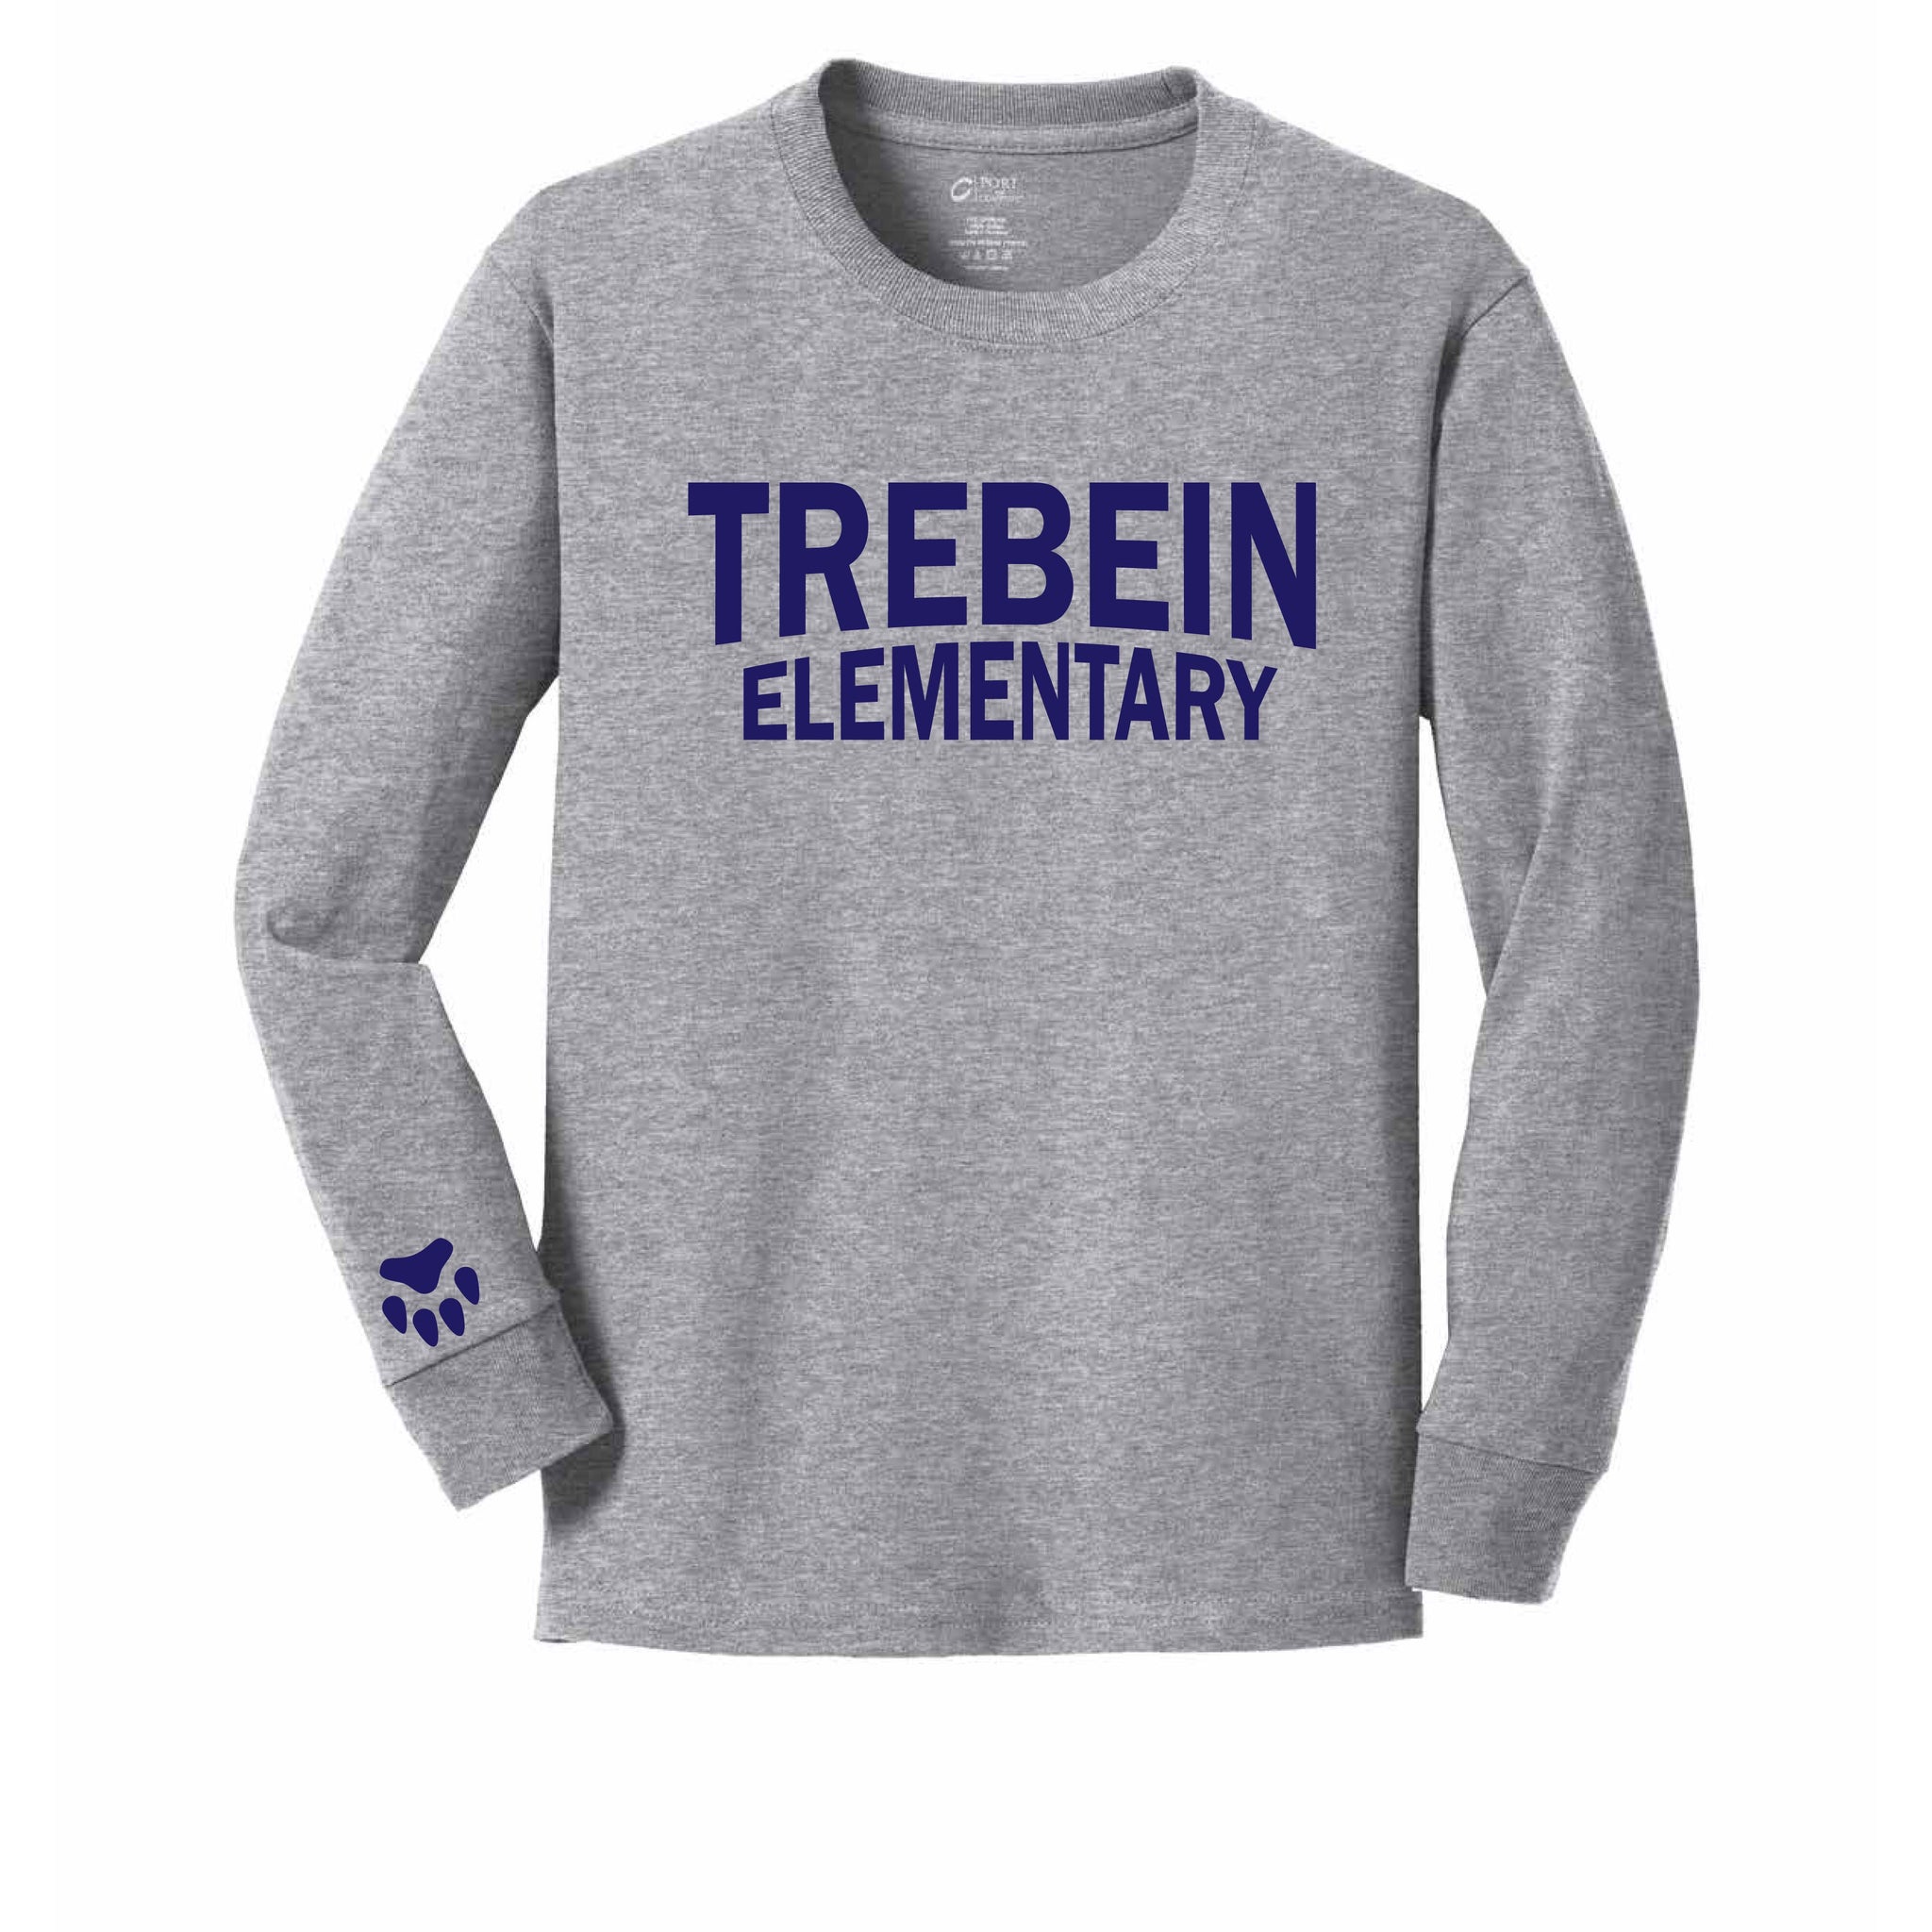 Trebein Elementary Long Sleeve T-Shirt